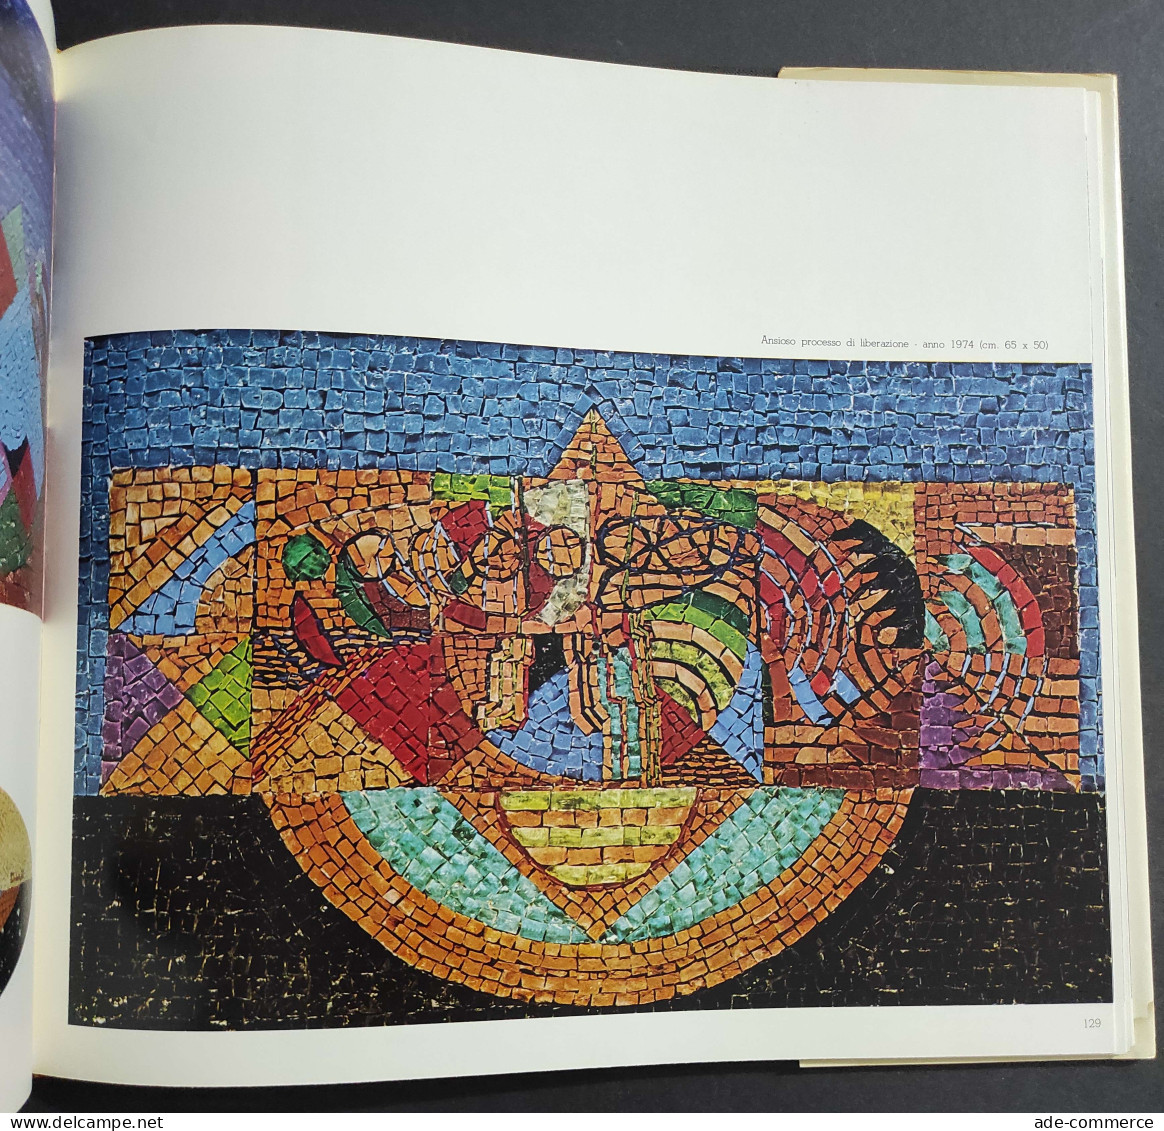 Simboli Culturali Nei Dipinti Di Tamburello - F. Passoni - Ed. Brixia - 1978                                             - Arts, Antiquités